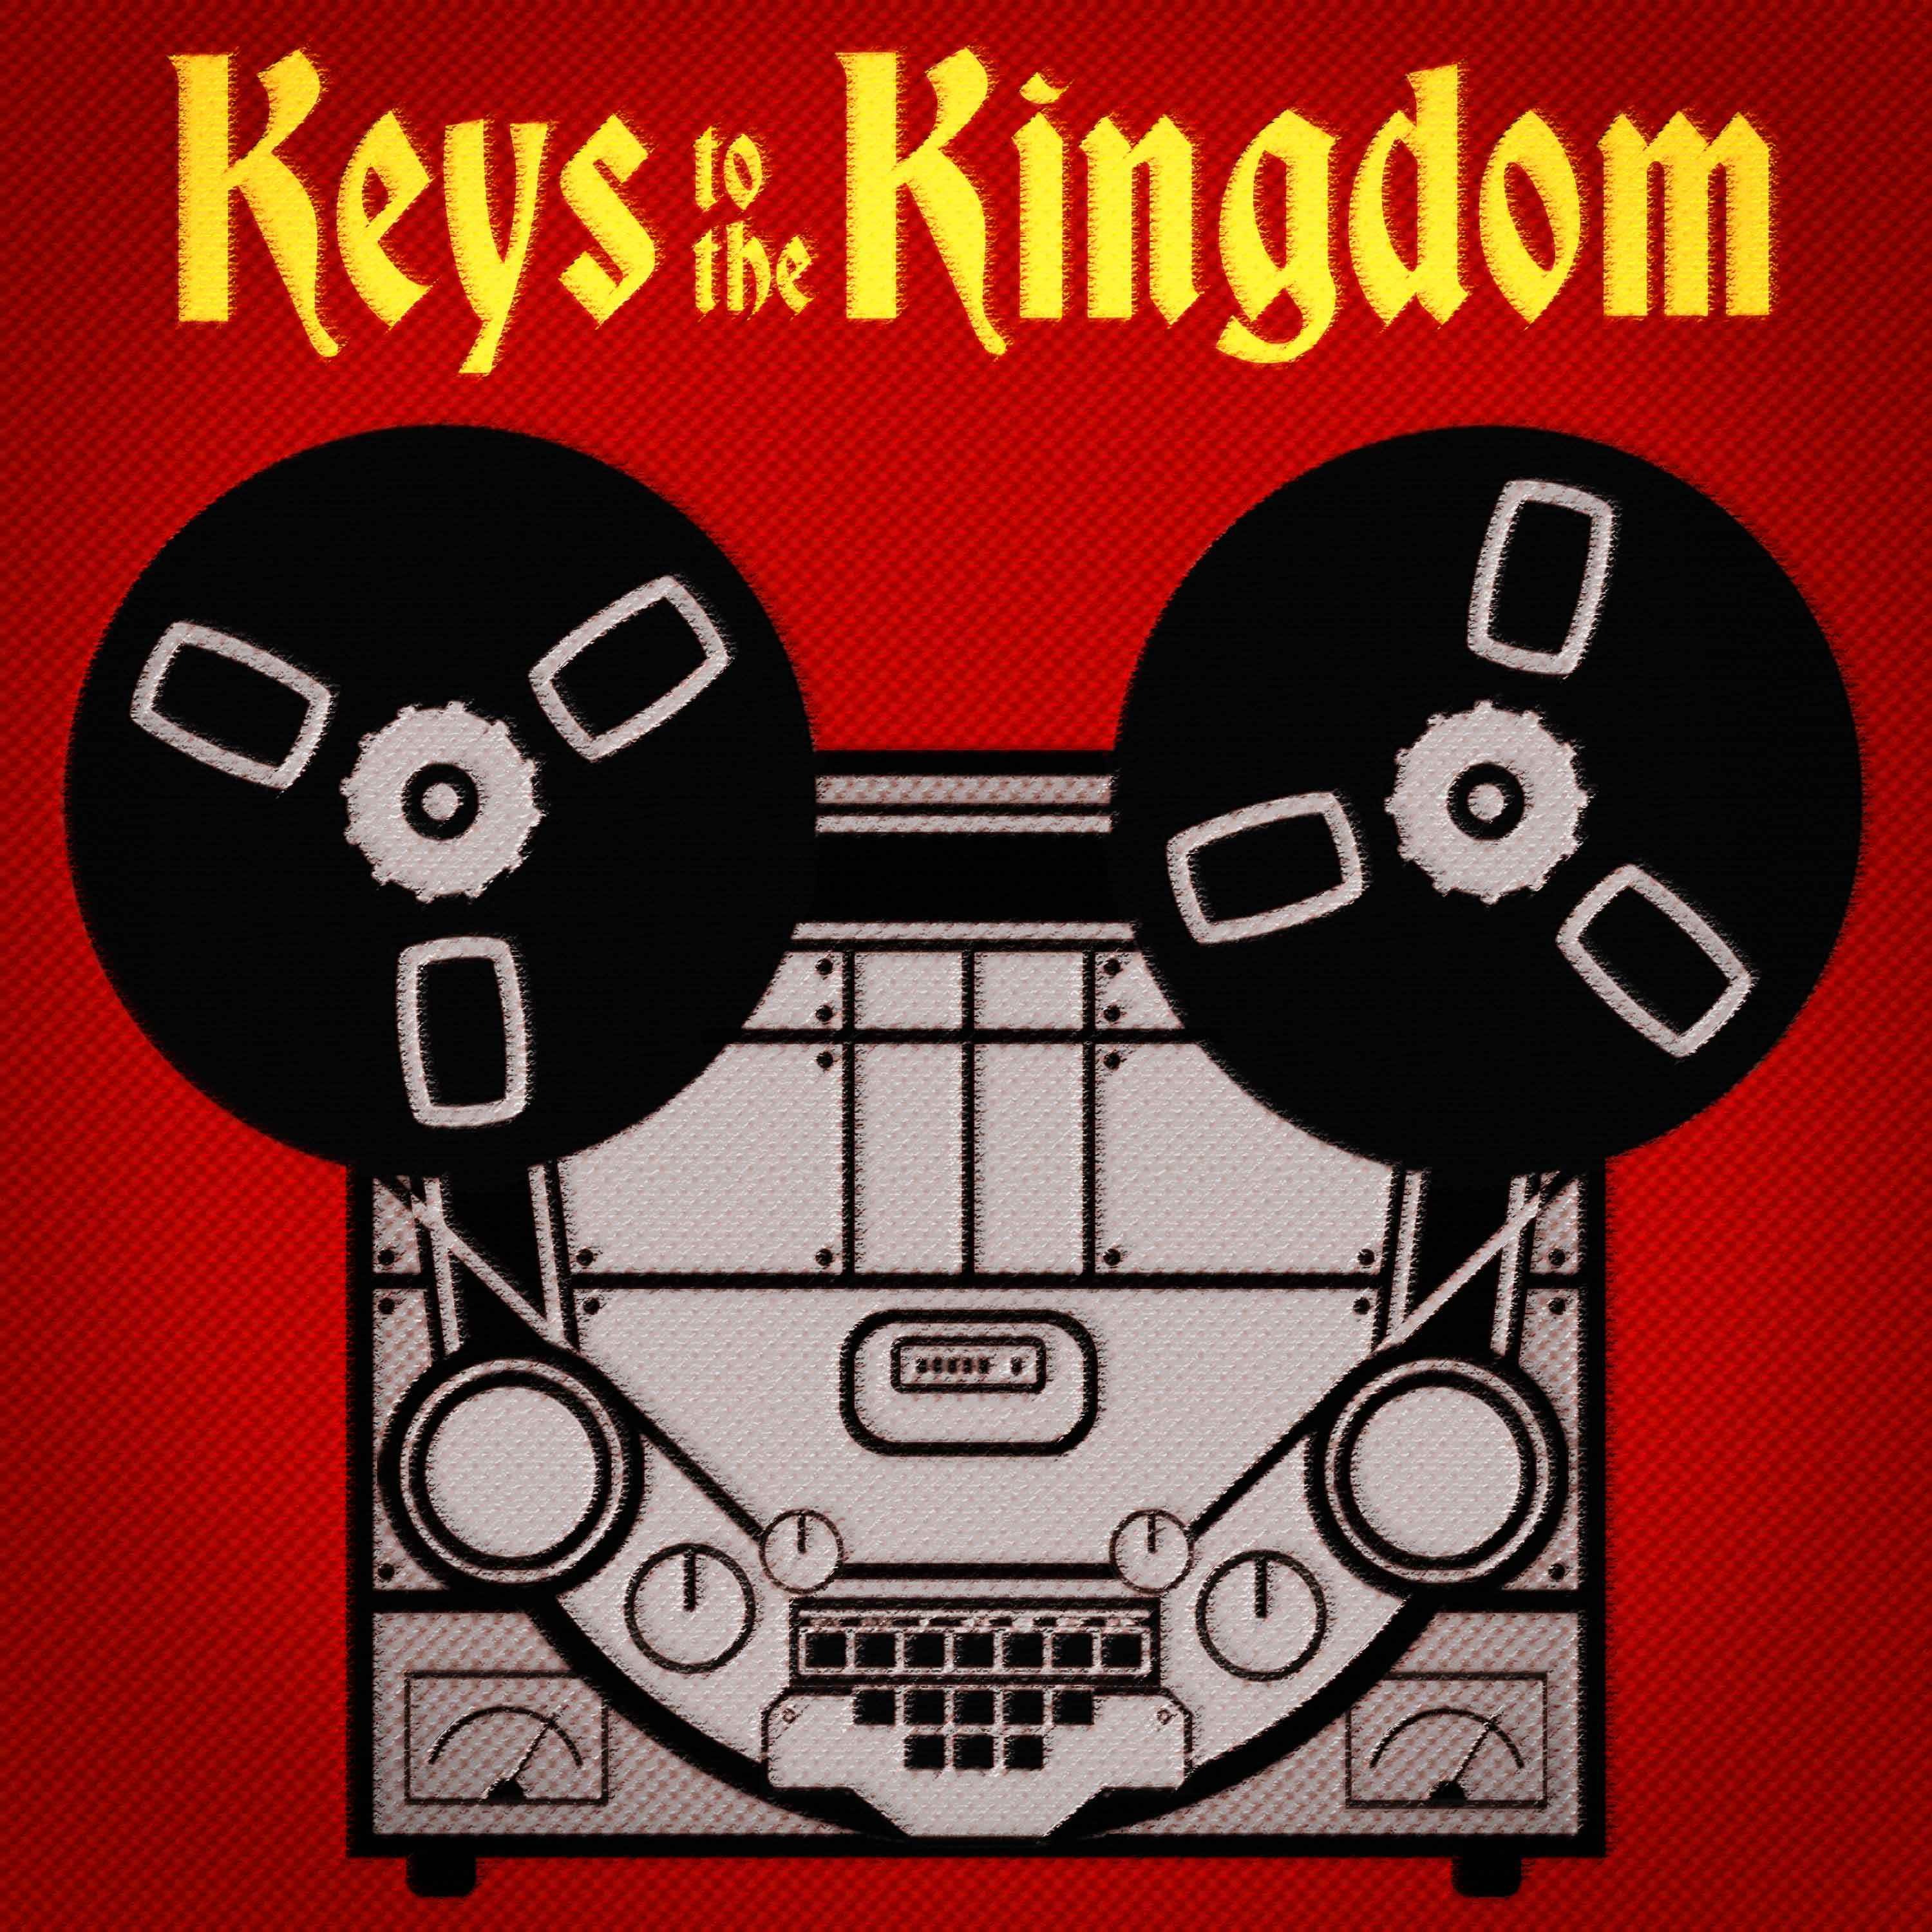 Introducing Keys to the Kingdom